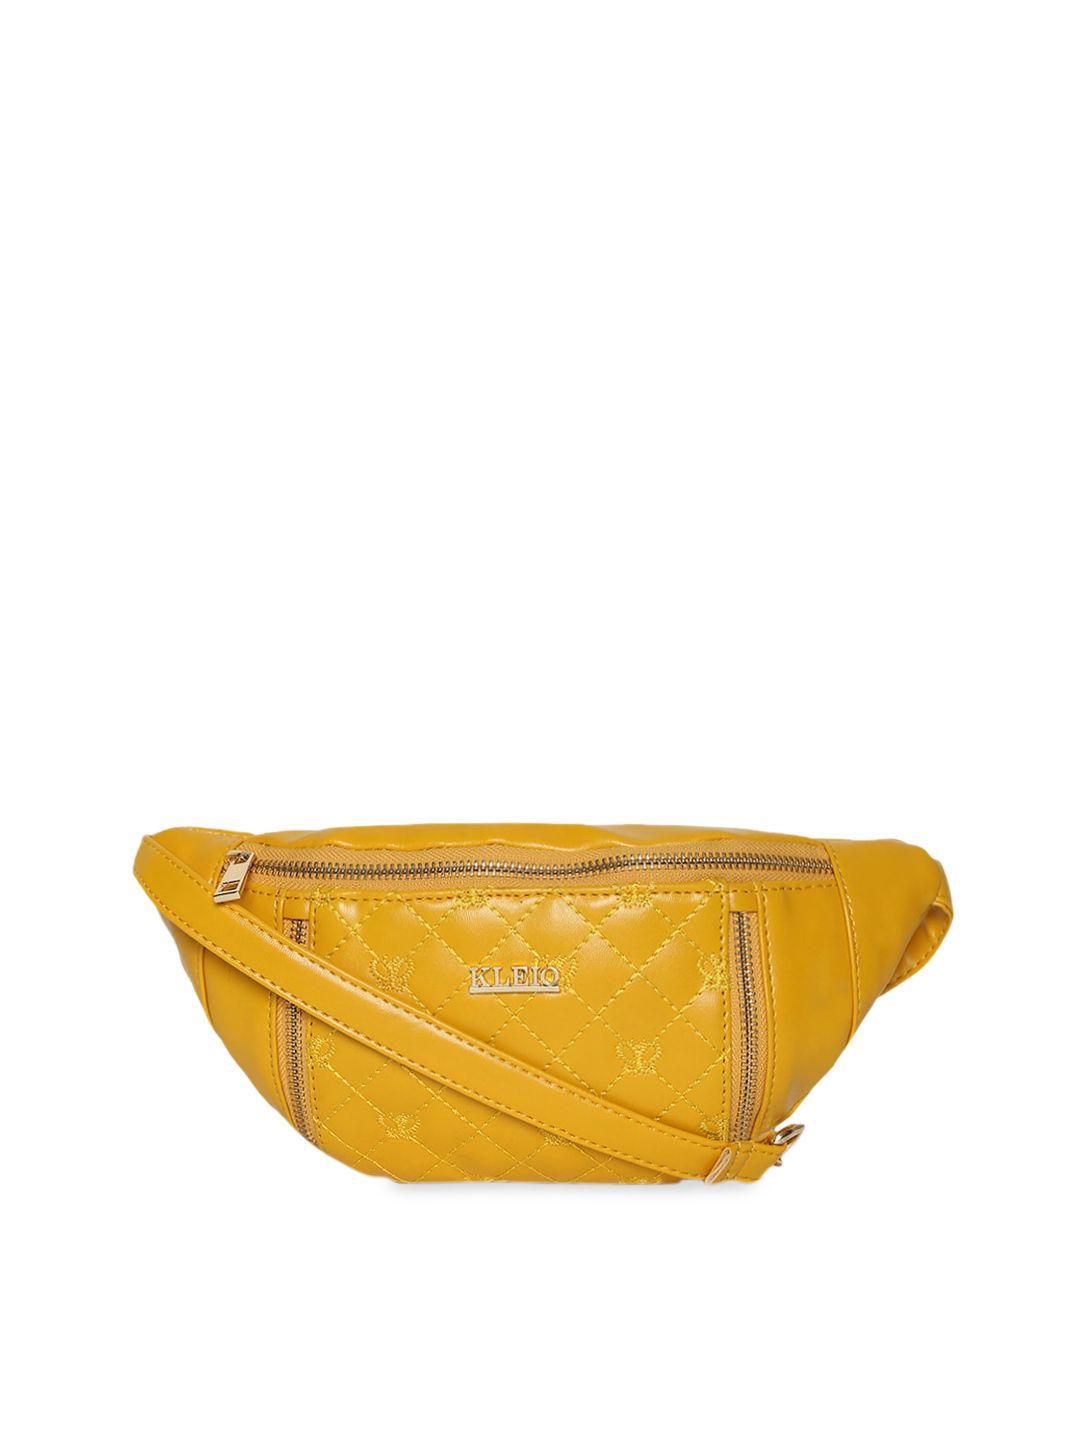 kleio yellow solid shoulder bag